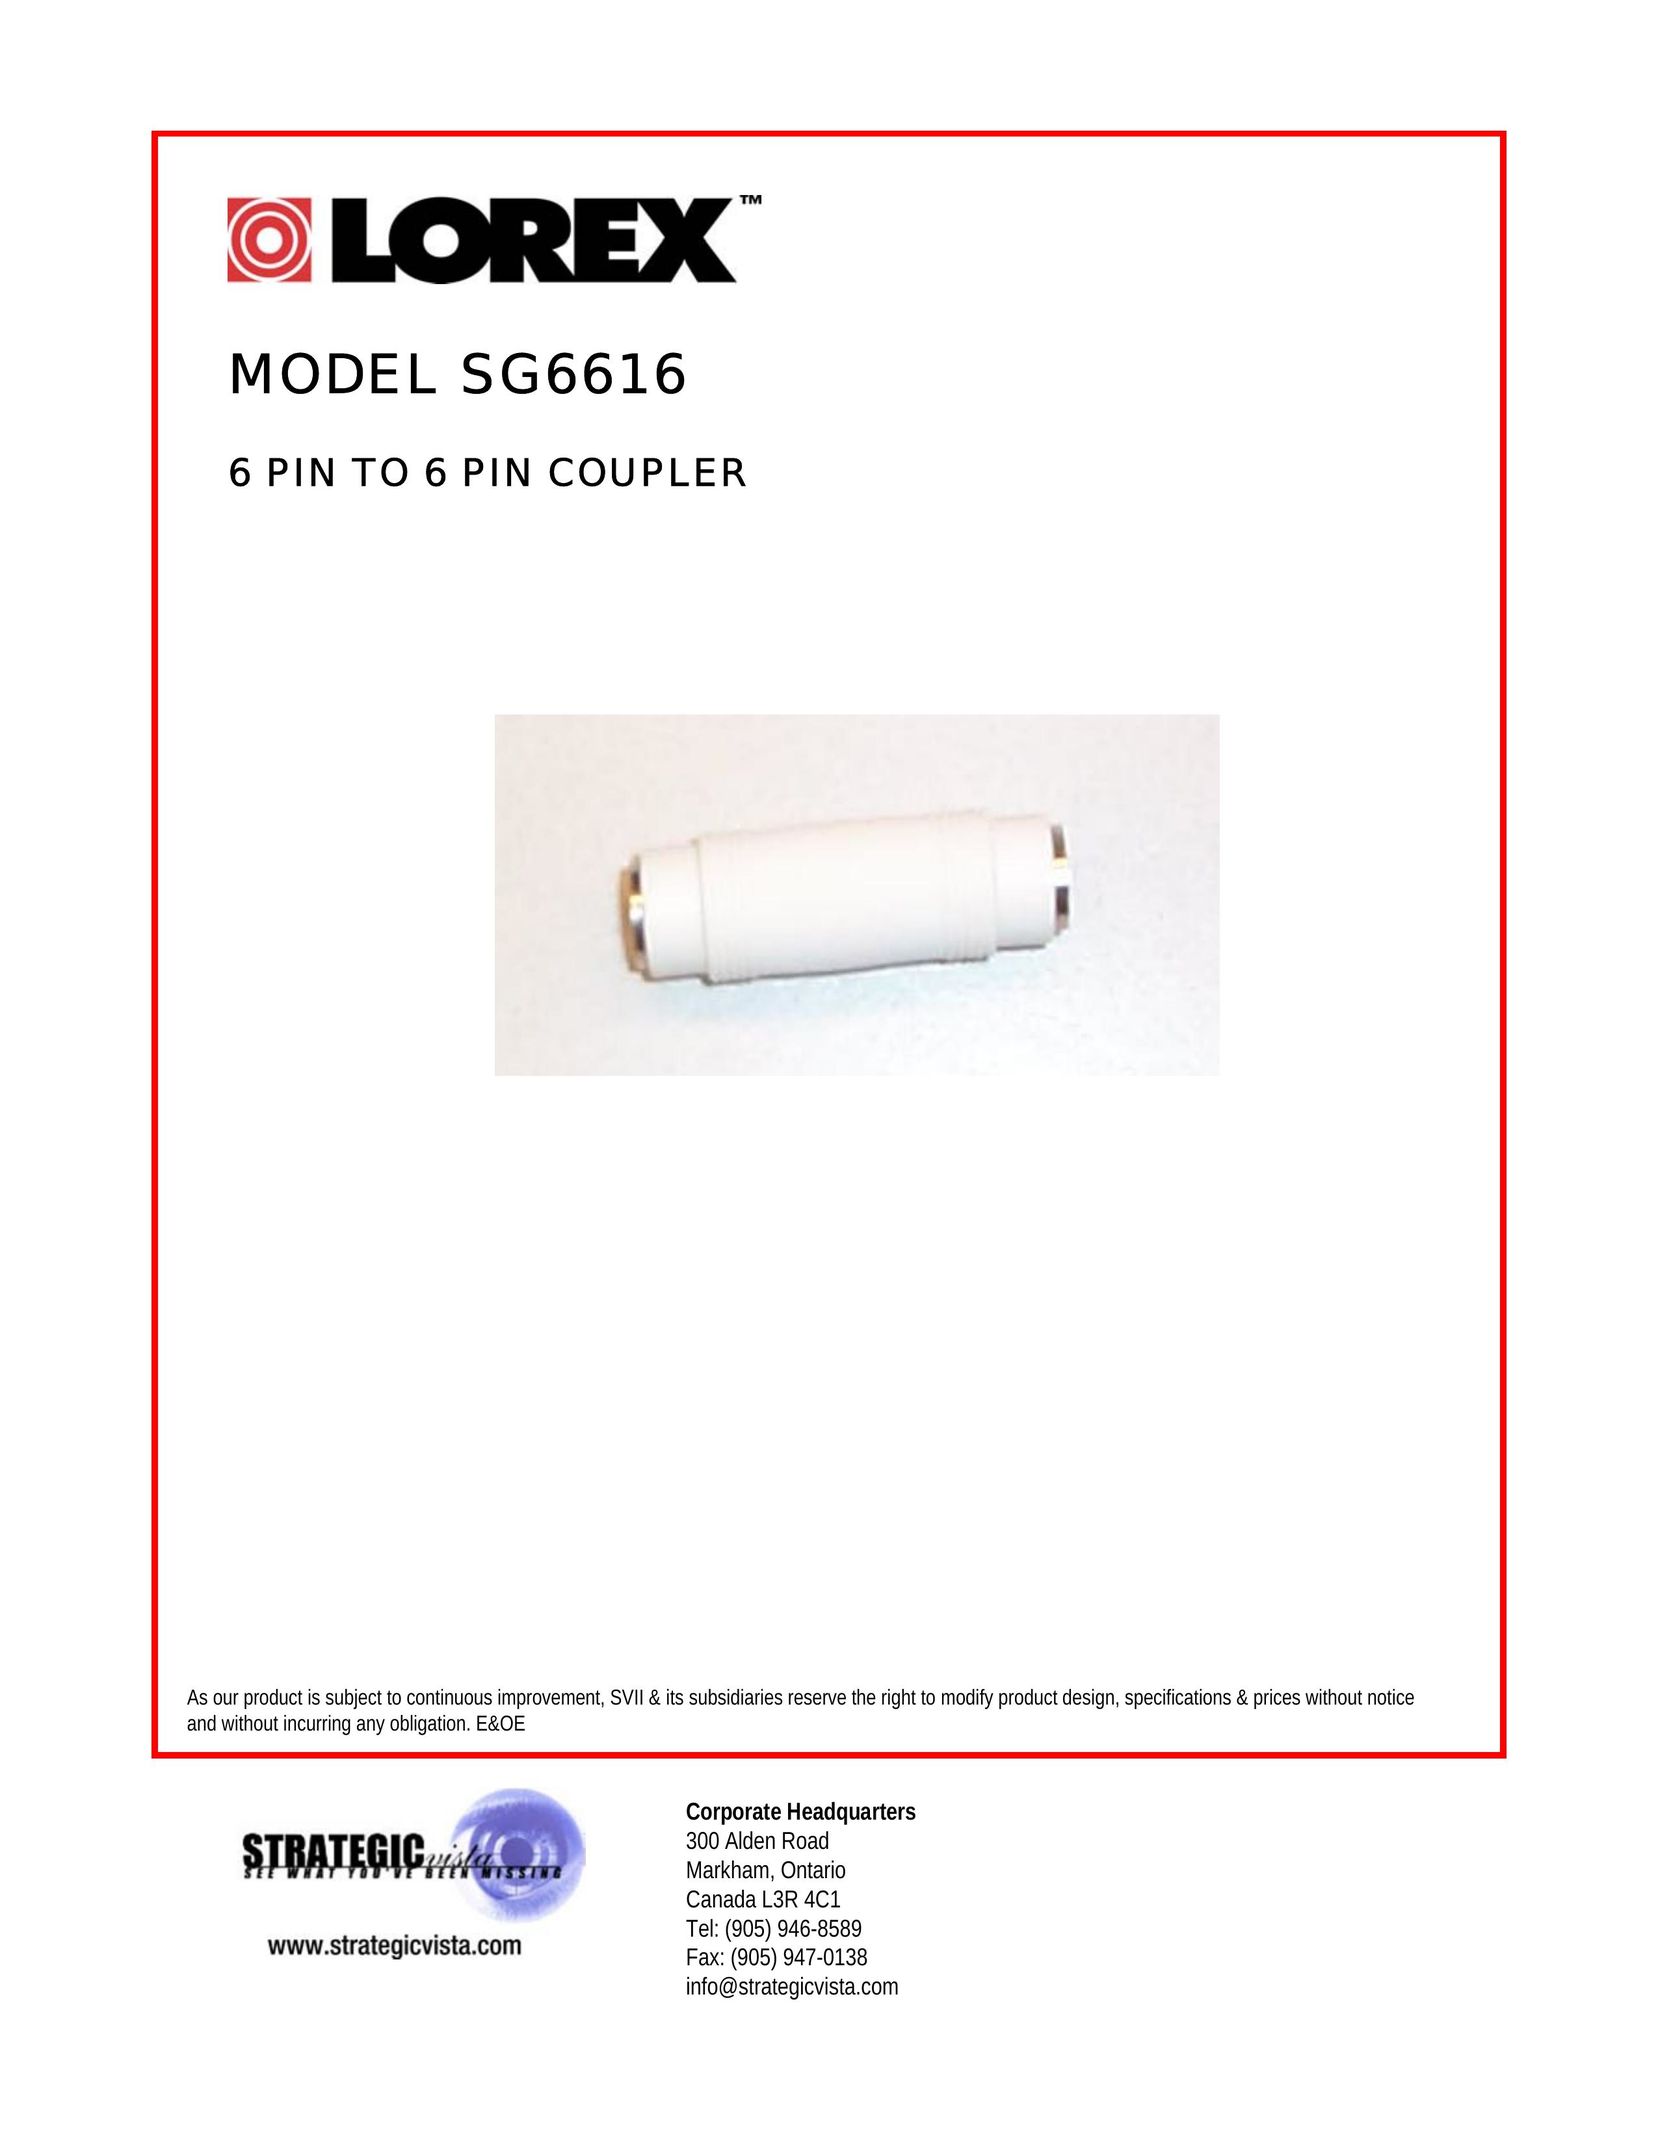 LOREX Technology SG6616 Switch User Manual